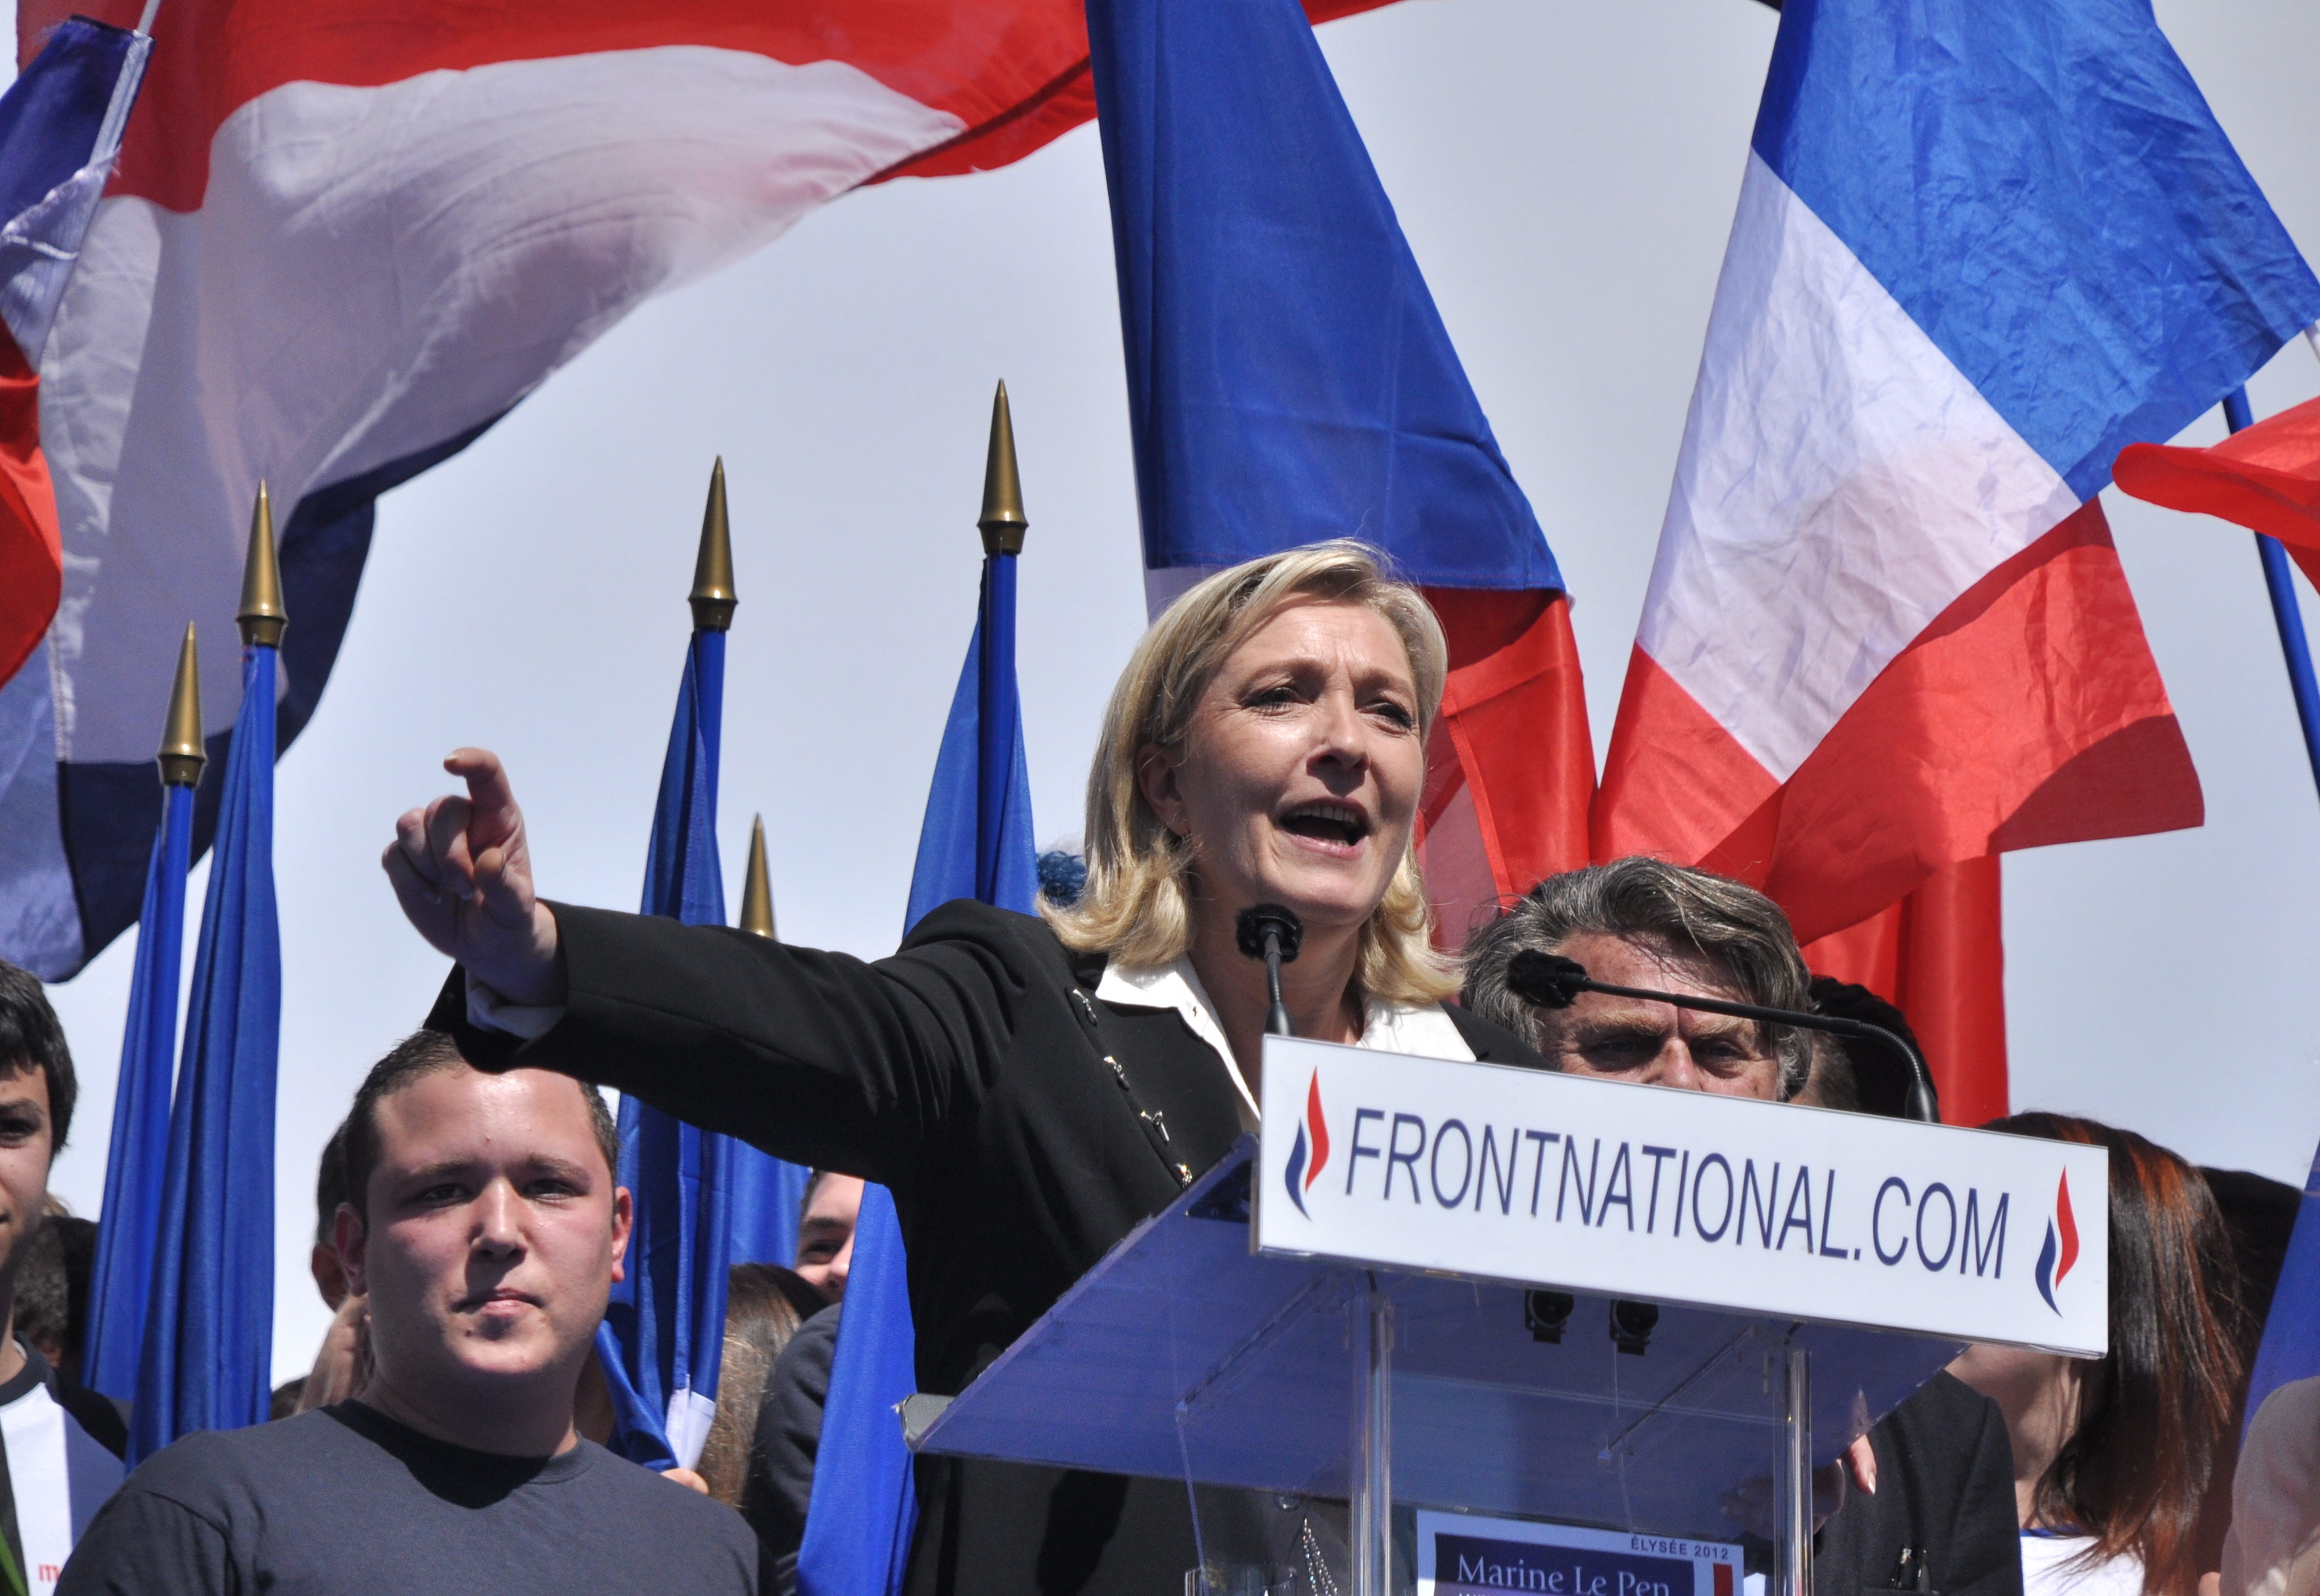 European Nationalism: Defining the Problem